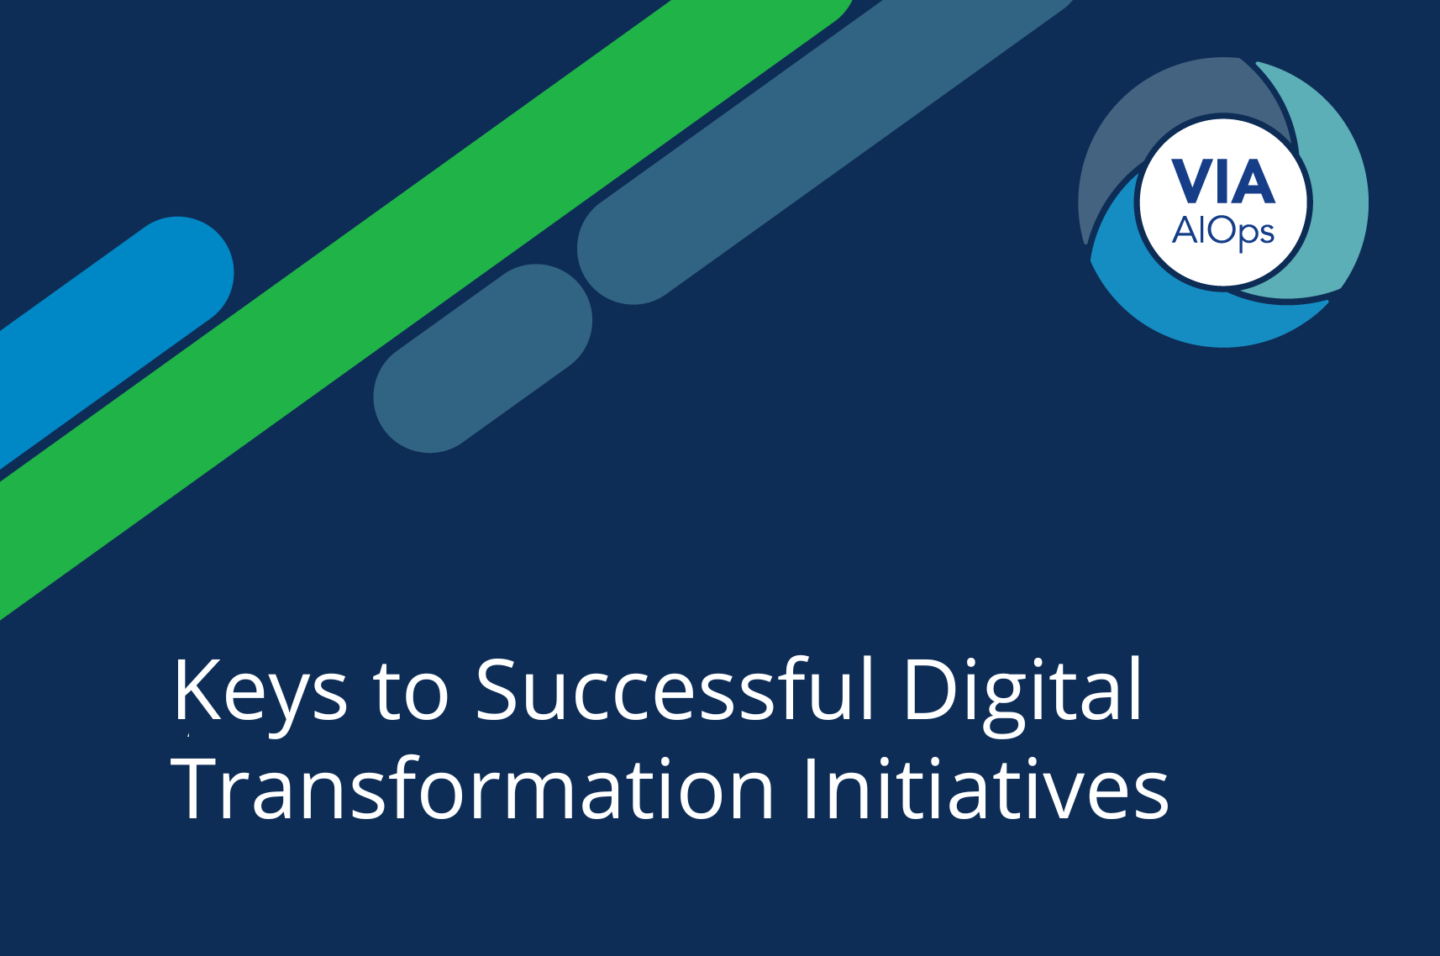 eys to Successful Digital Transformation Initiatives